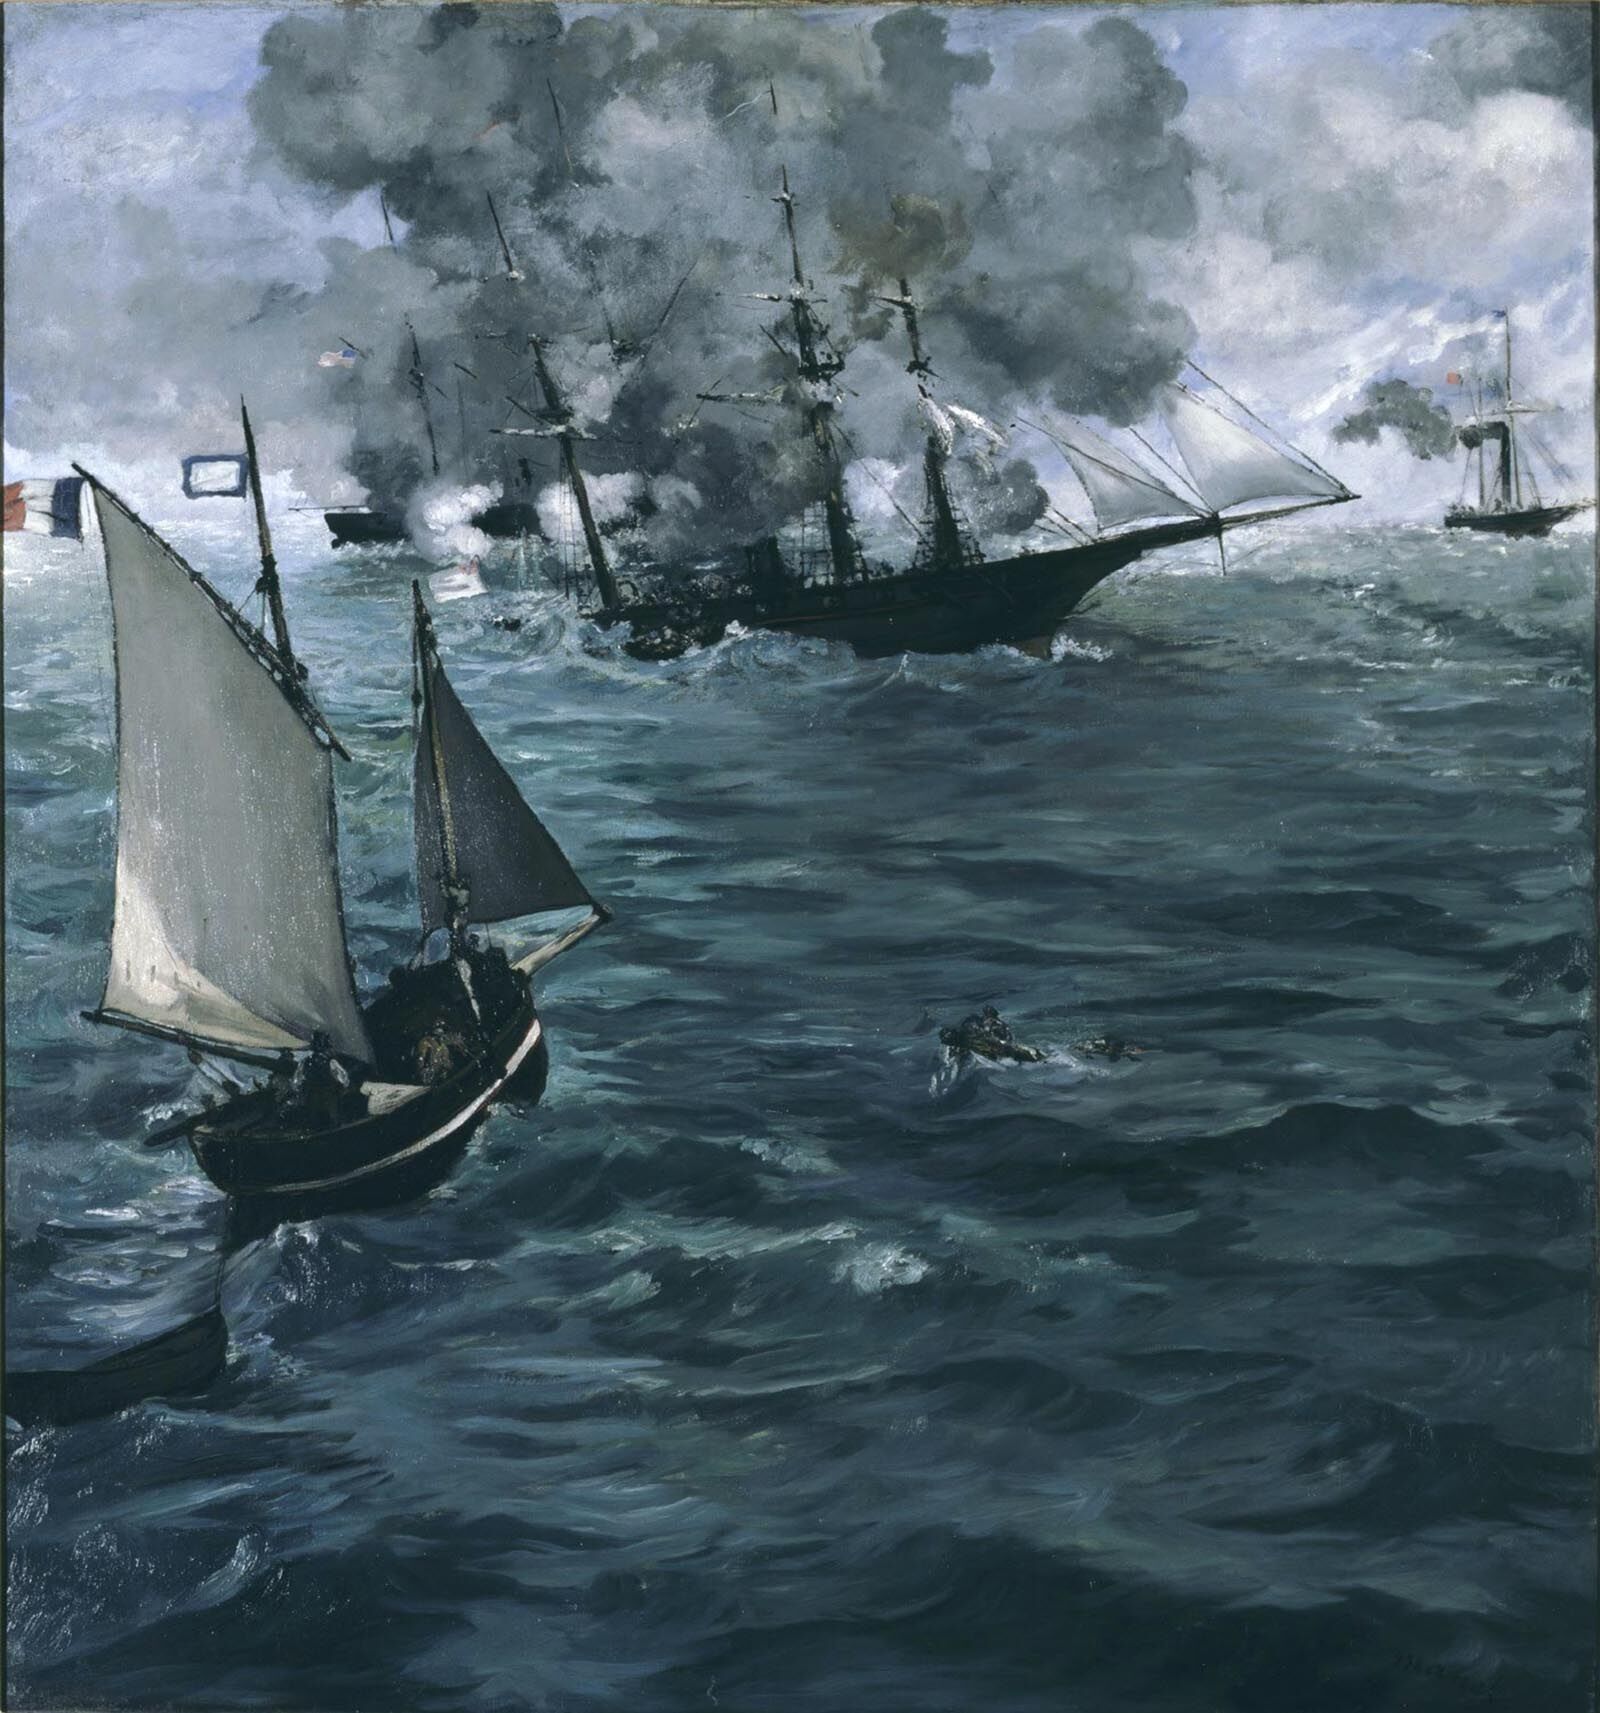 Édouard Manet, The Battle of The Alabama and Kearsarge, 1864, Philadelphia Museum of Art